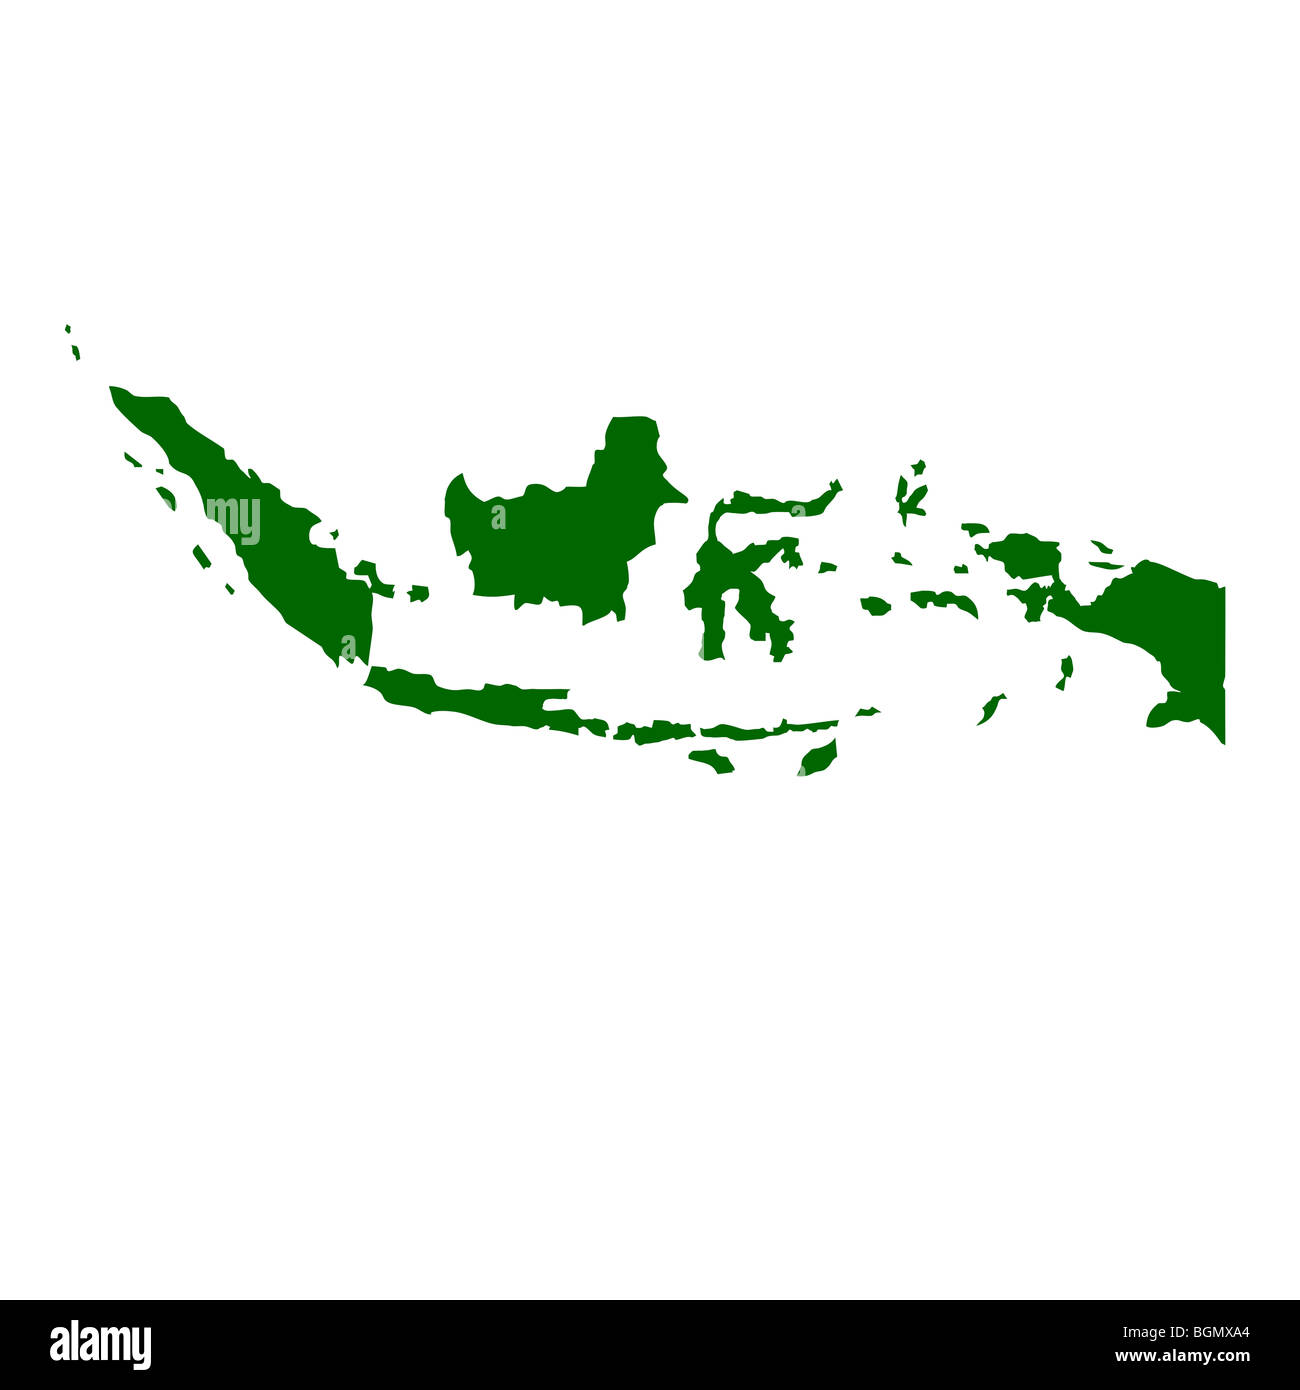 Indonesia map isolated on white background. Stock Photo